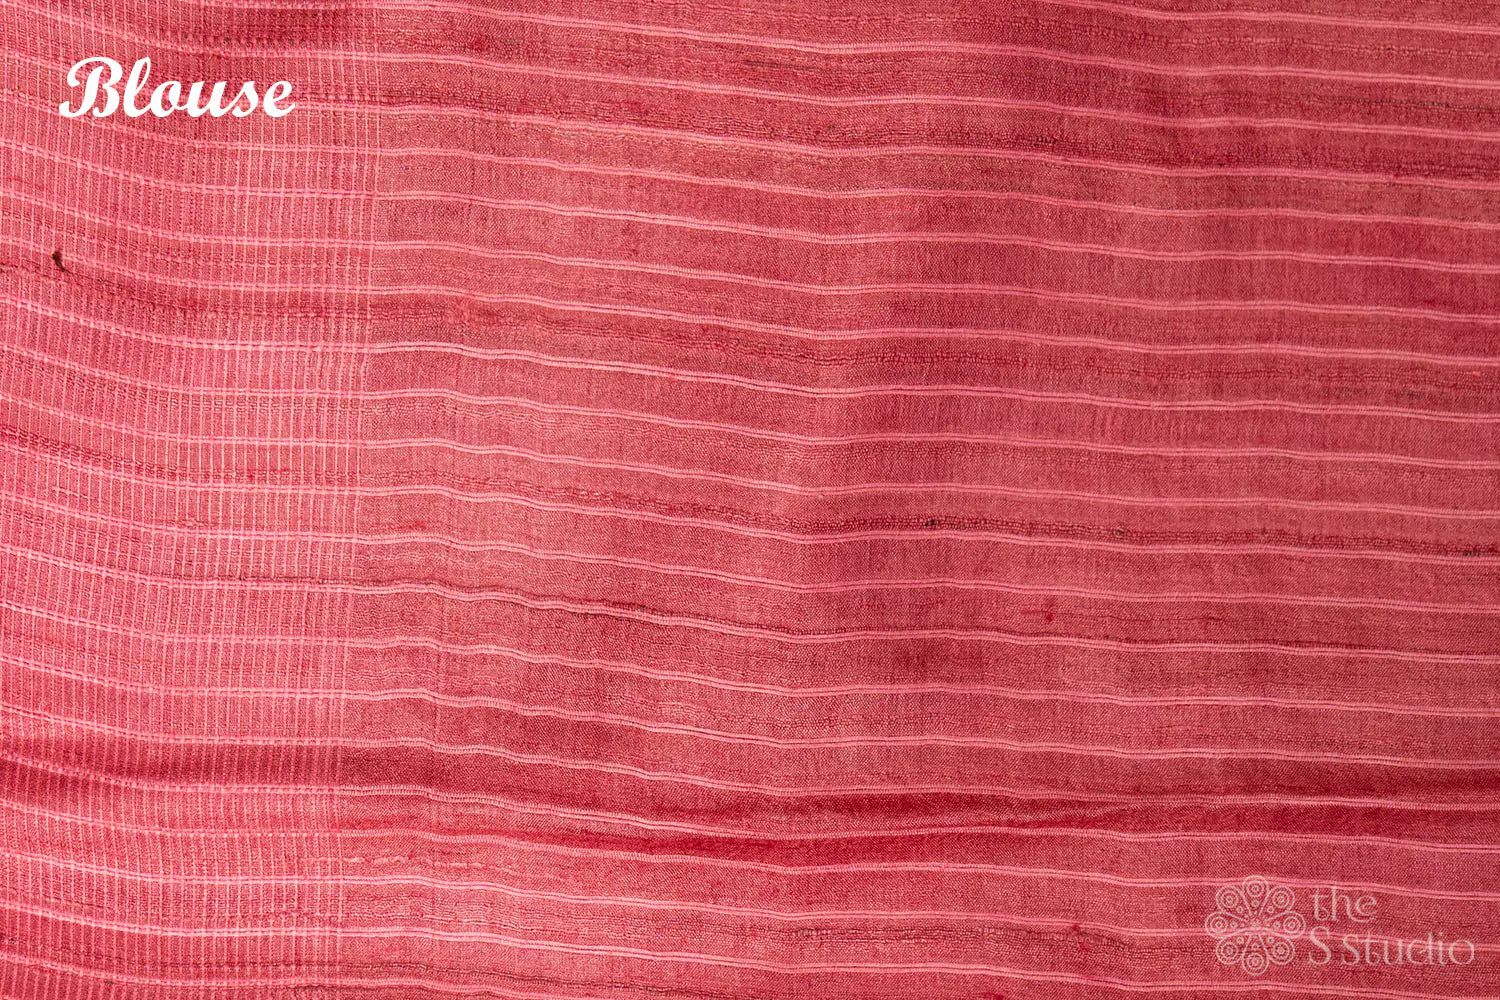 Blue printed tussar silk saree with pink border